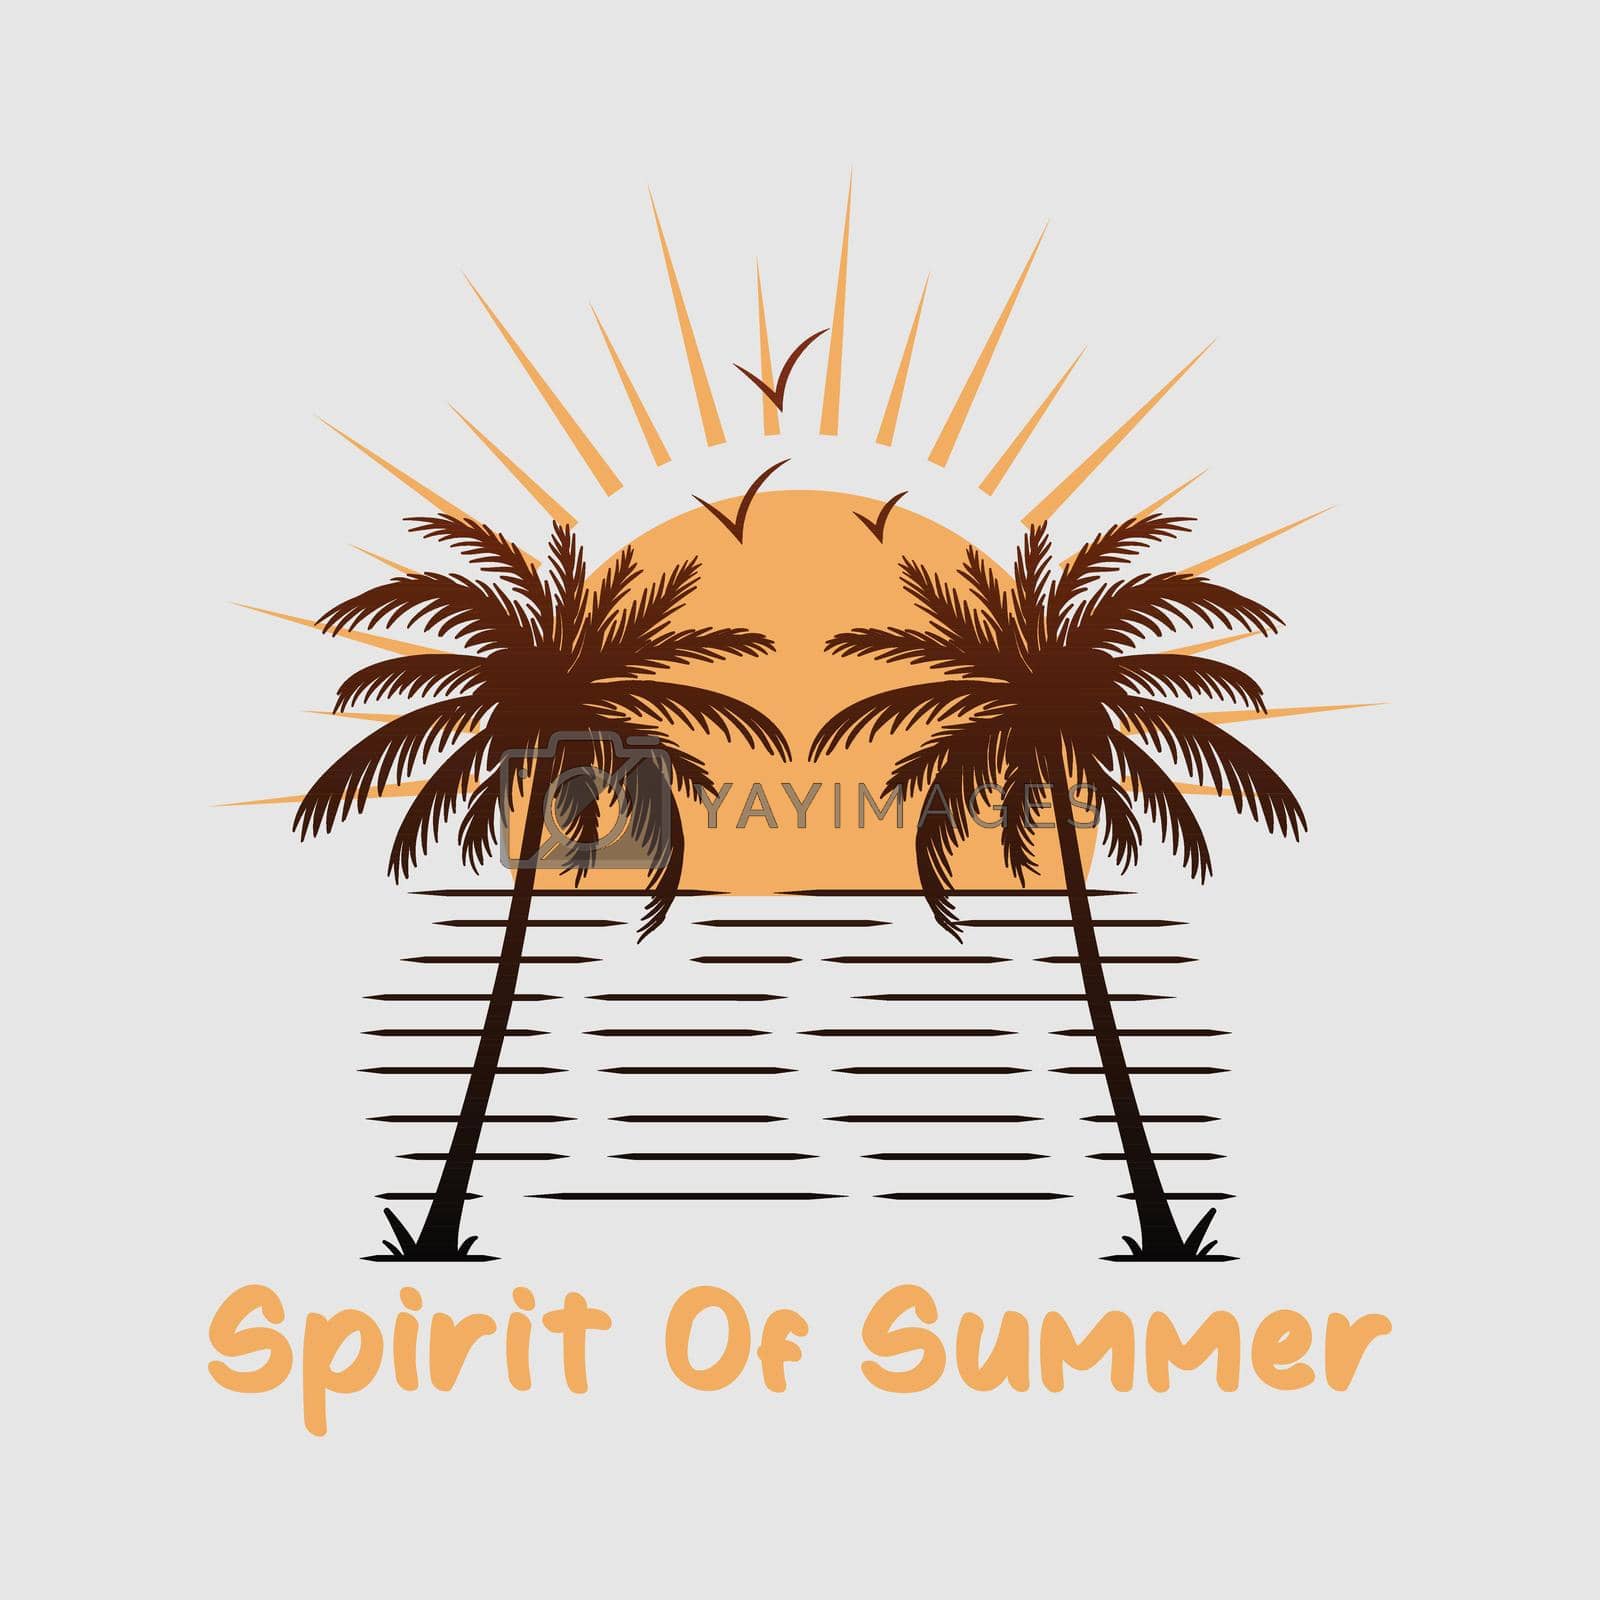 Royalty free image of Spirit of summer. Summer theme illustration by Menyoen